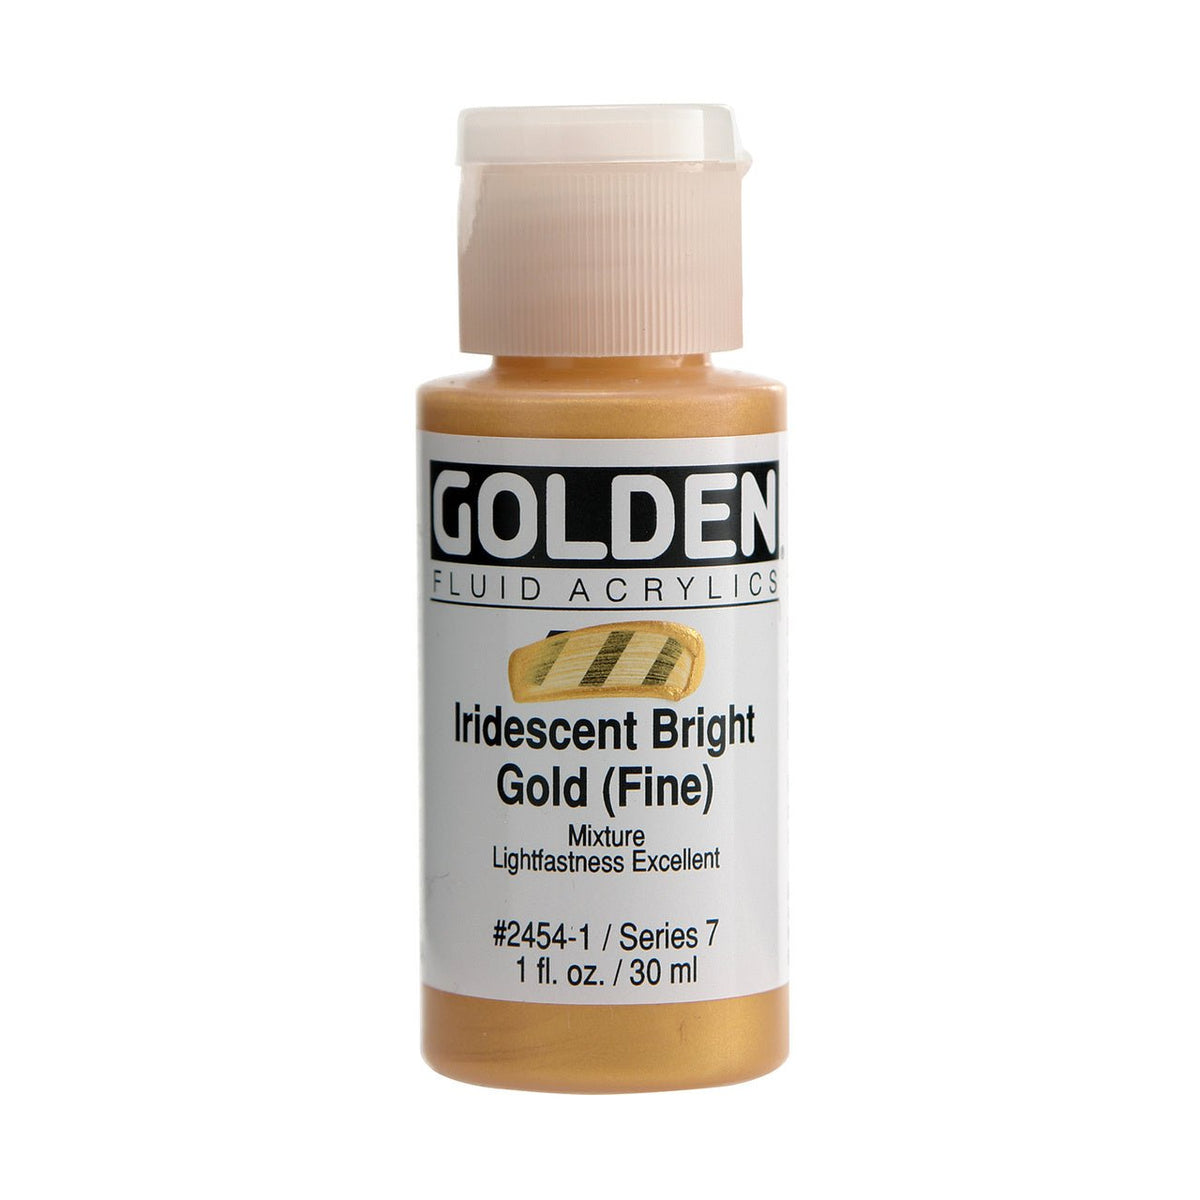 Golden Fluid Acrylic Iridescent Bright Gold (fine) 1 oz - merriartist.com